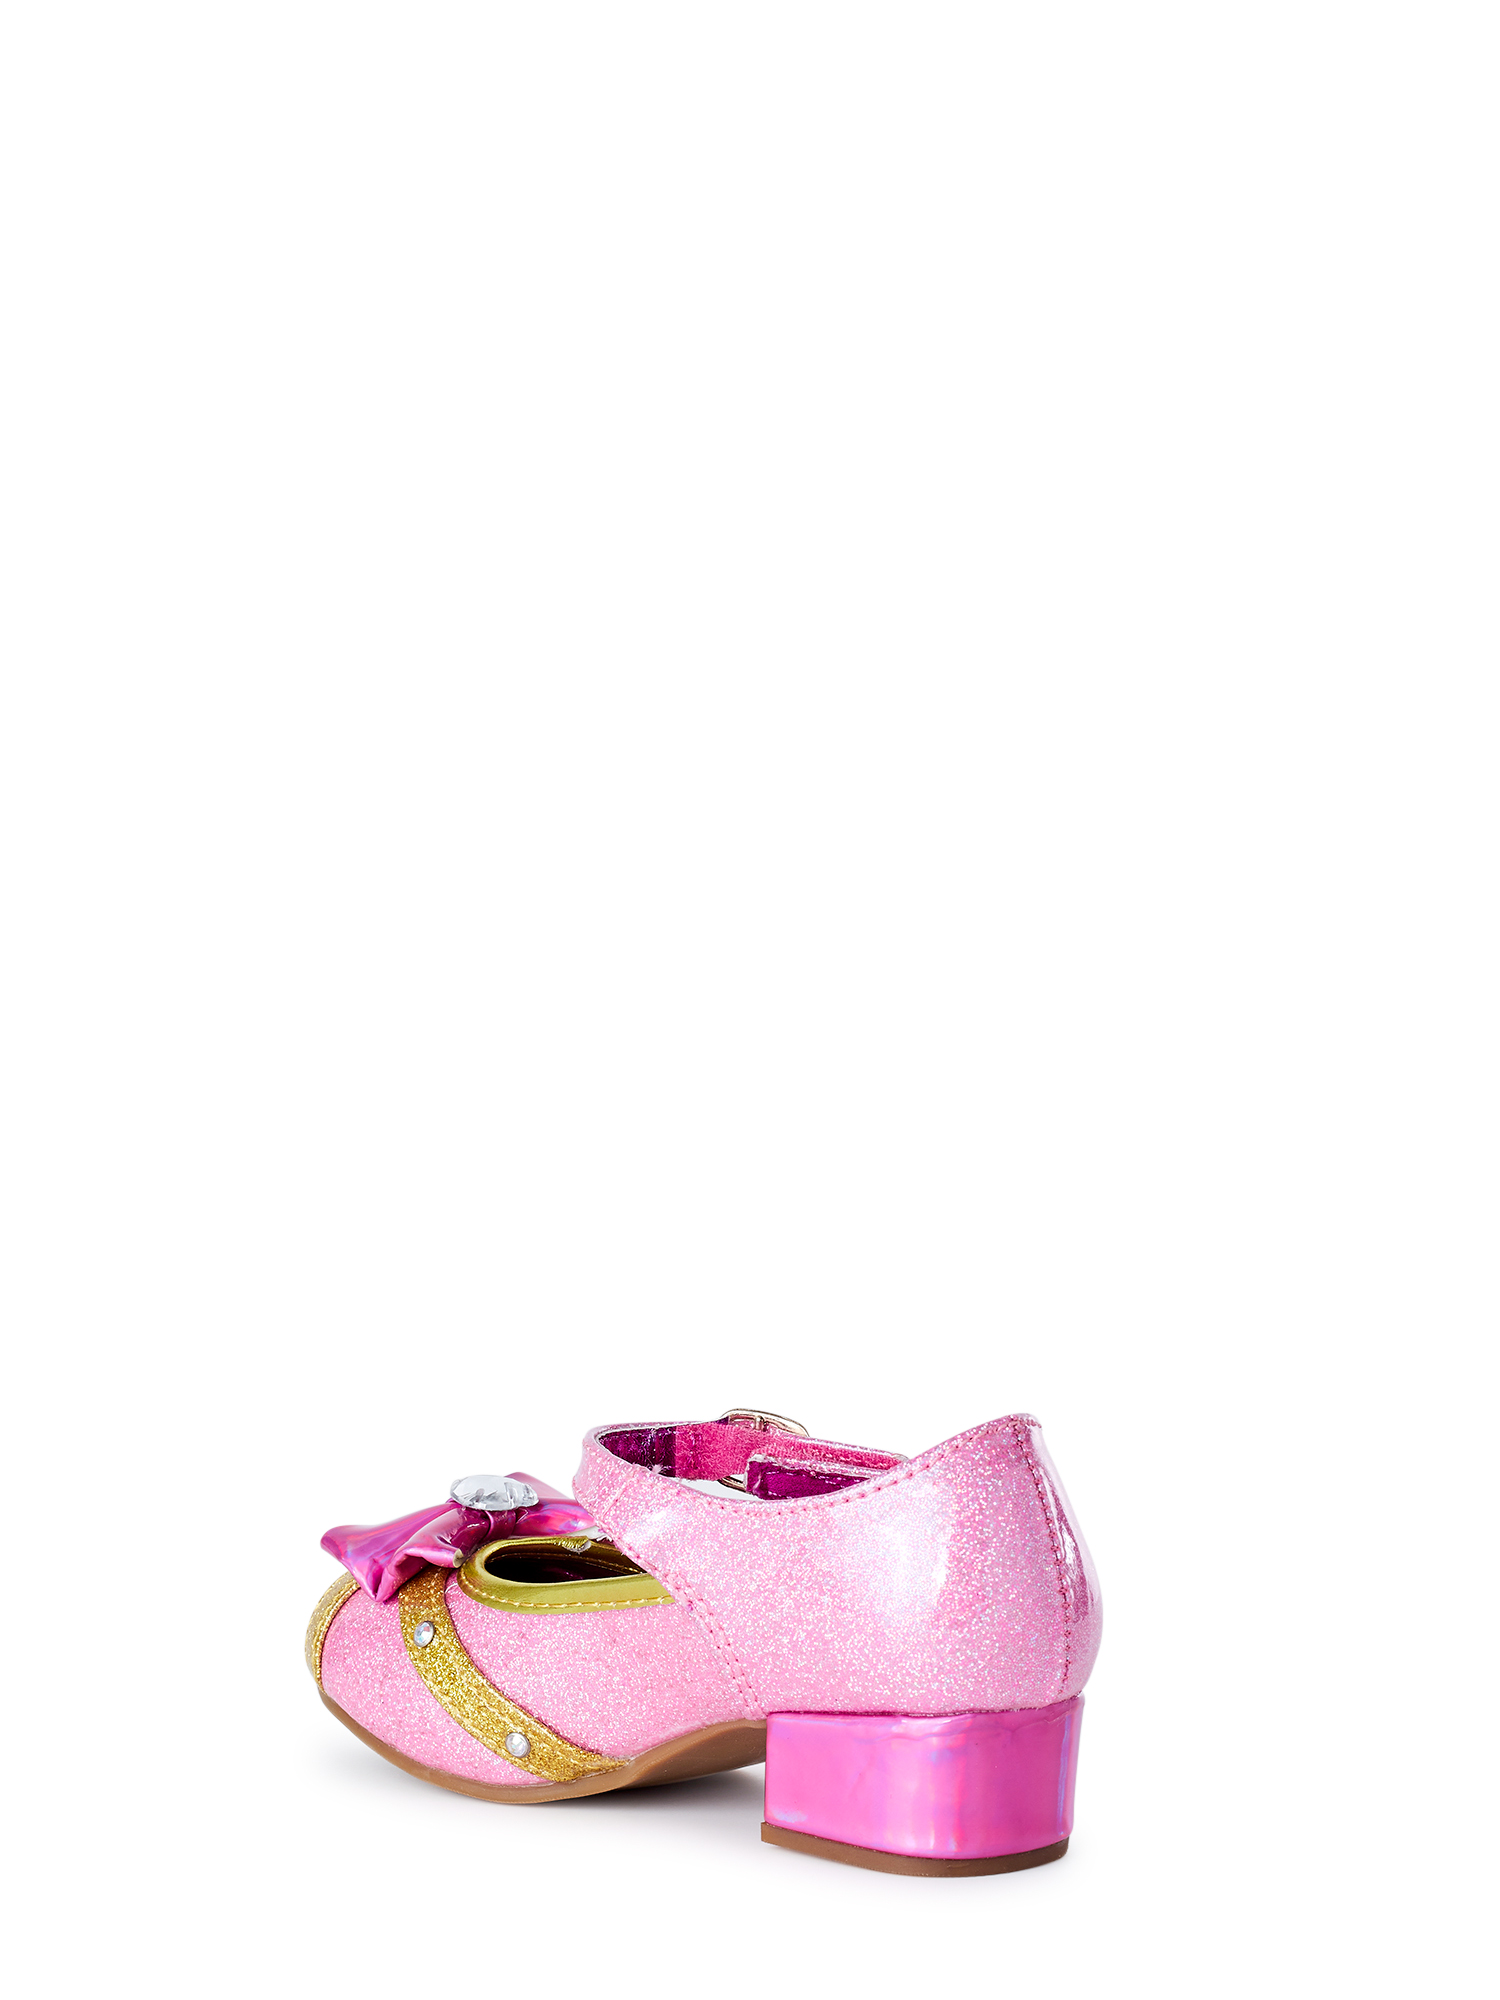 Disney Junior FANCY NANCY Pink Dress Up Shoes Heels Pretend Accessory Set |  eBay